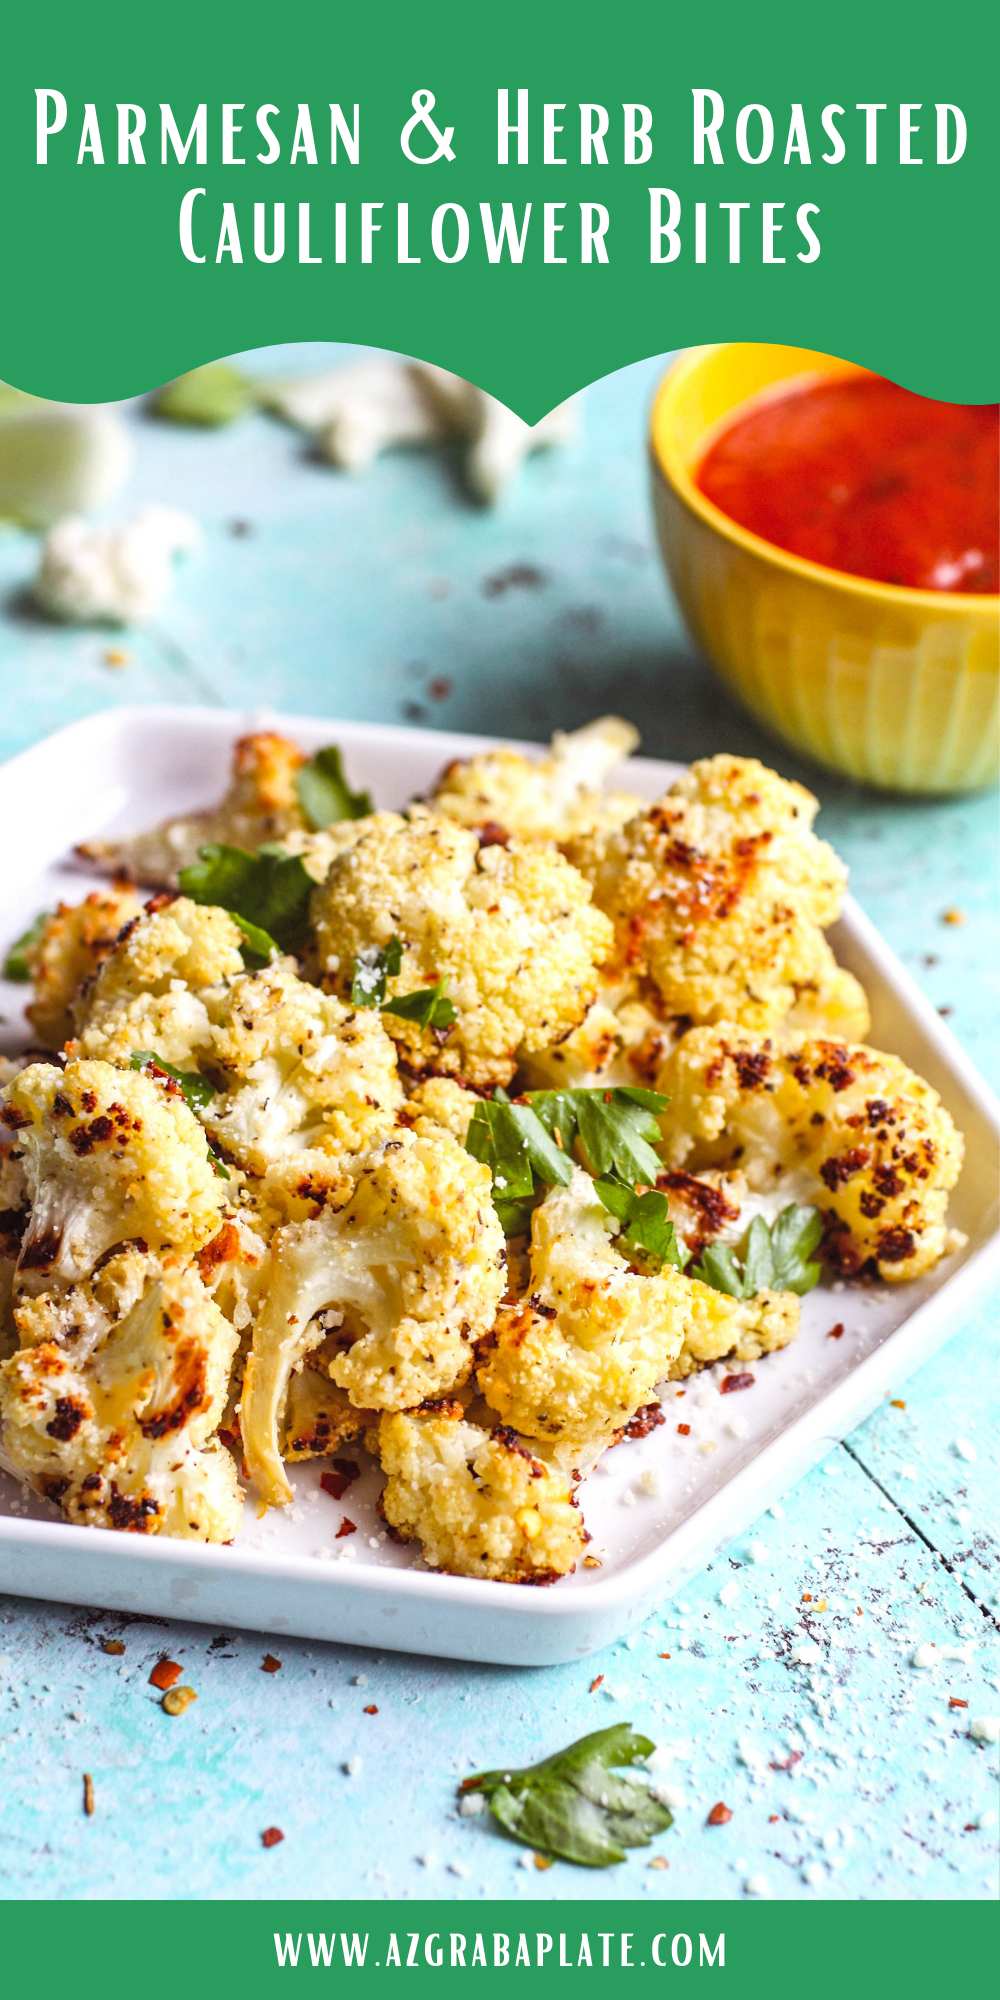 Parmesan & Herb Roasted Cauliflower Bites make an amazing snack!